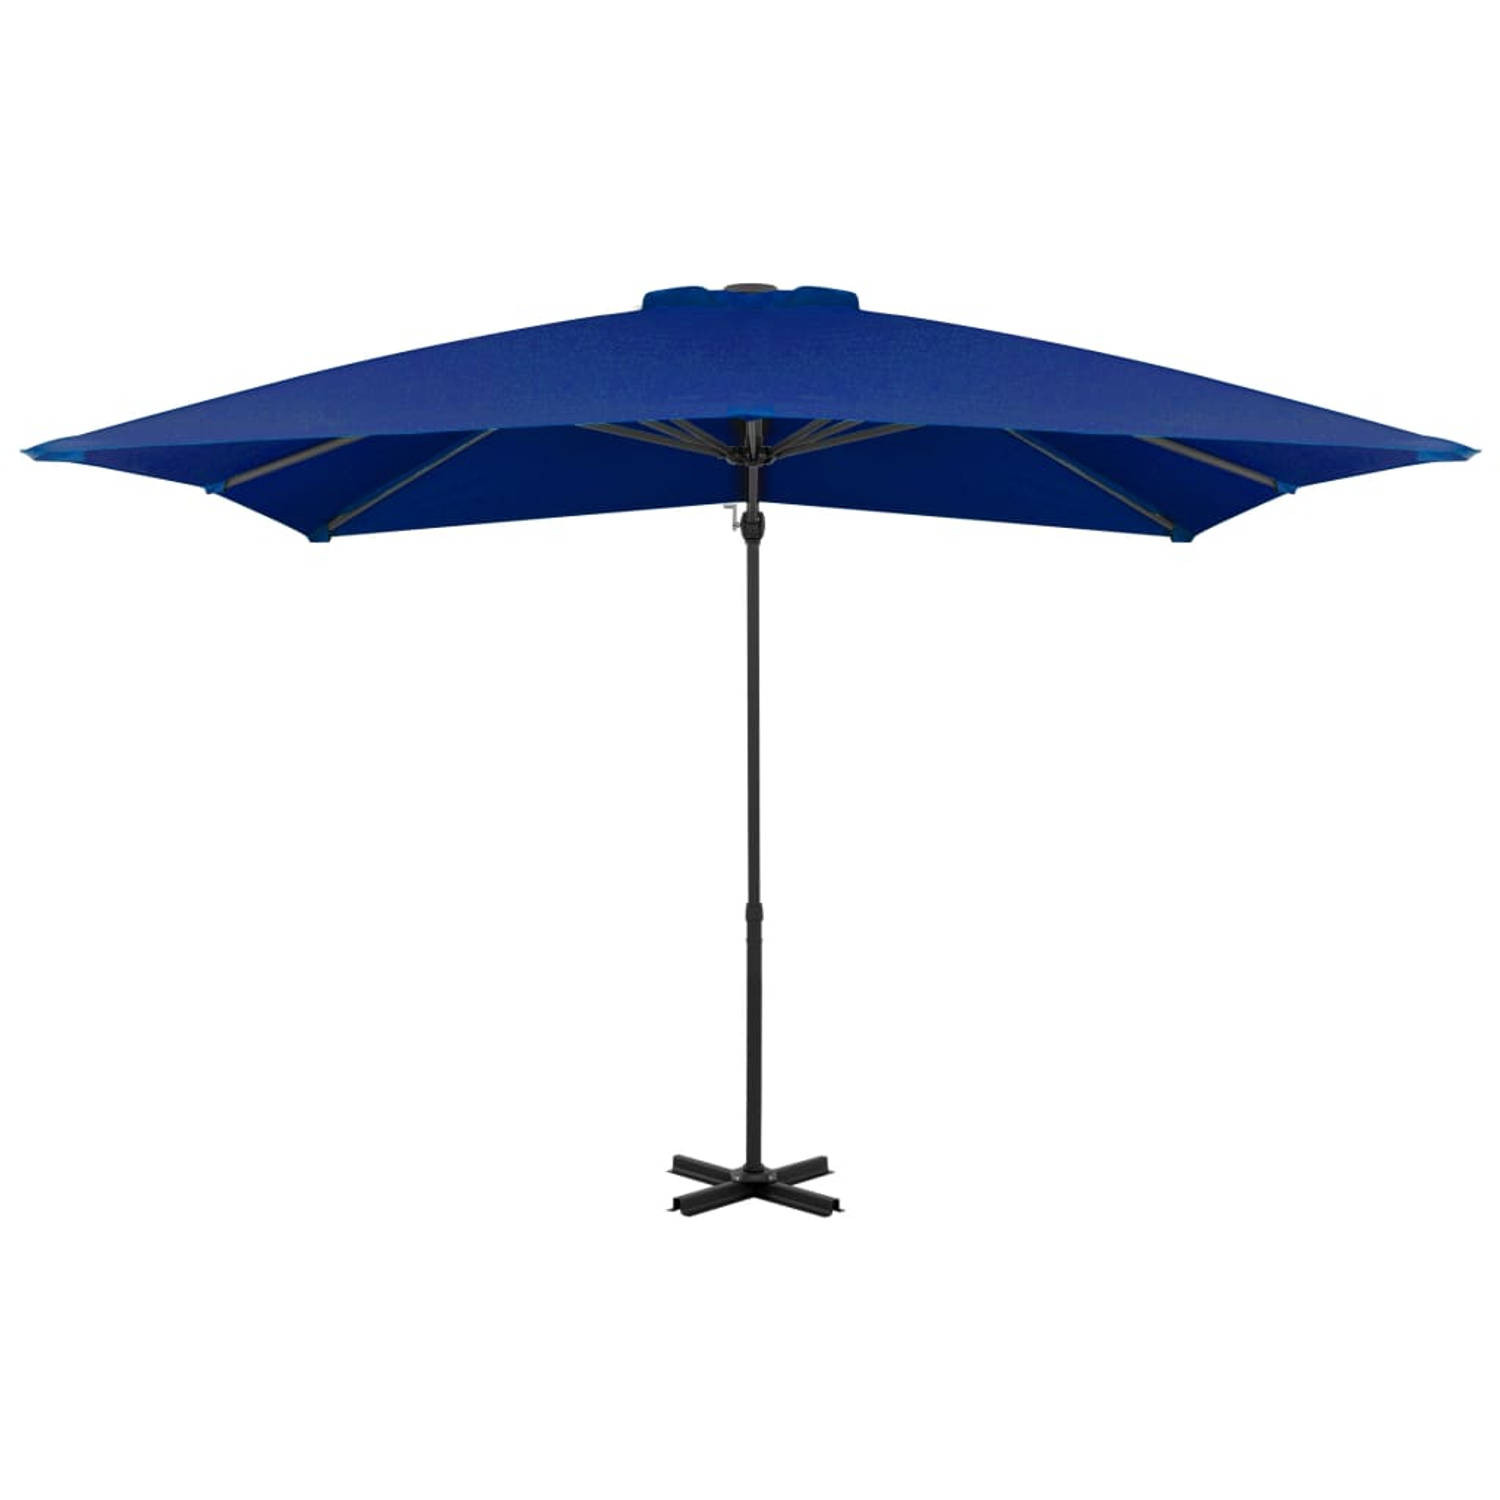 The Living Store Hangparasol - The Living Store - Hangende parasol - 250 x 250 x 230 cm - Azuurblauw